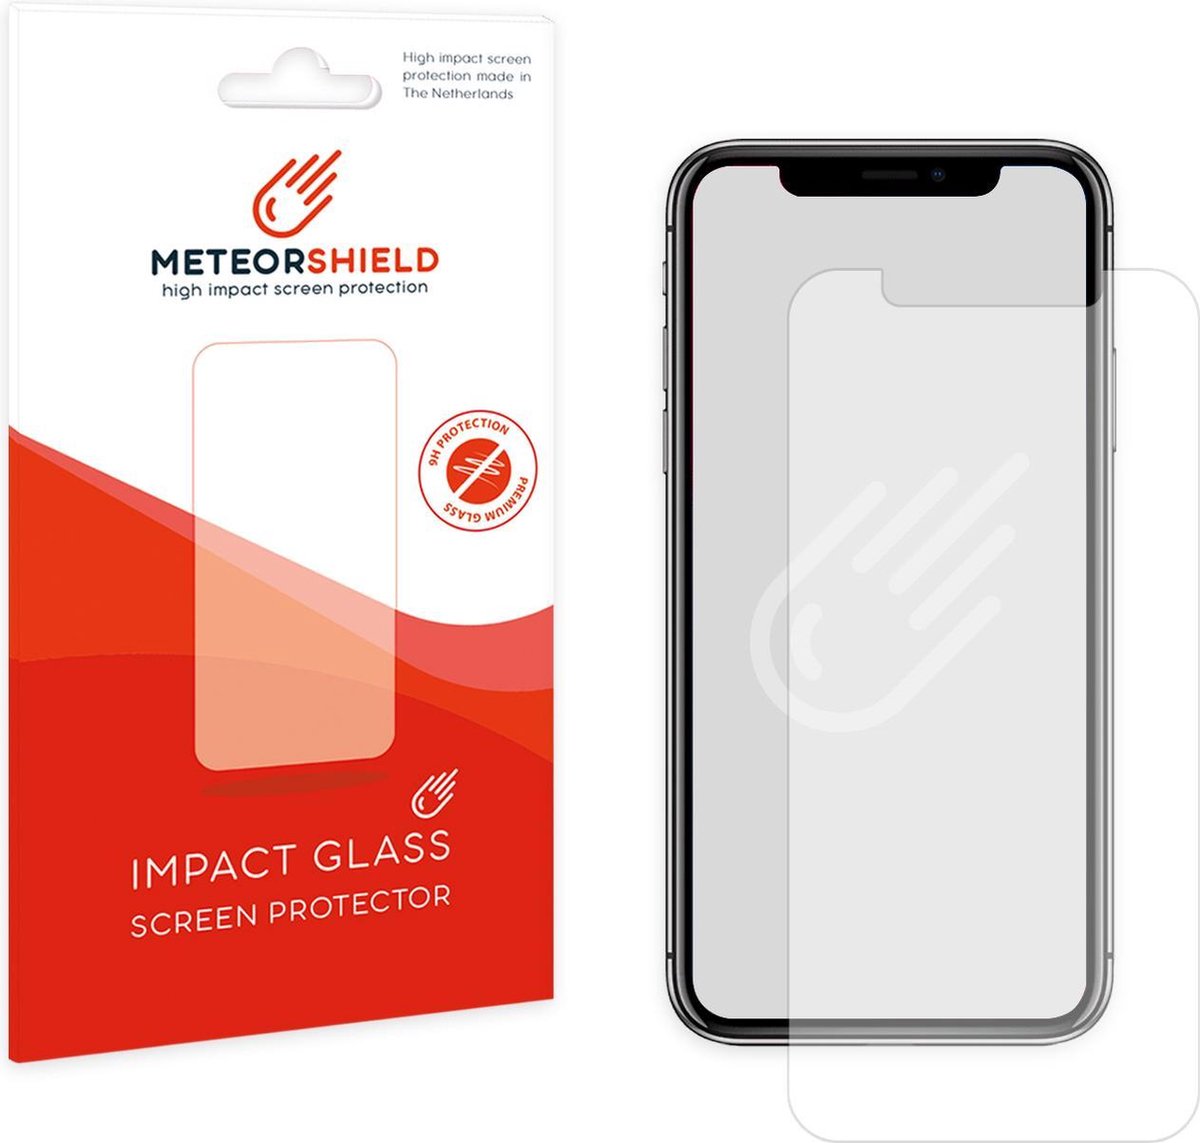 Meteorshield iPhone X screenprotector - Ultra clear impact glass